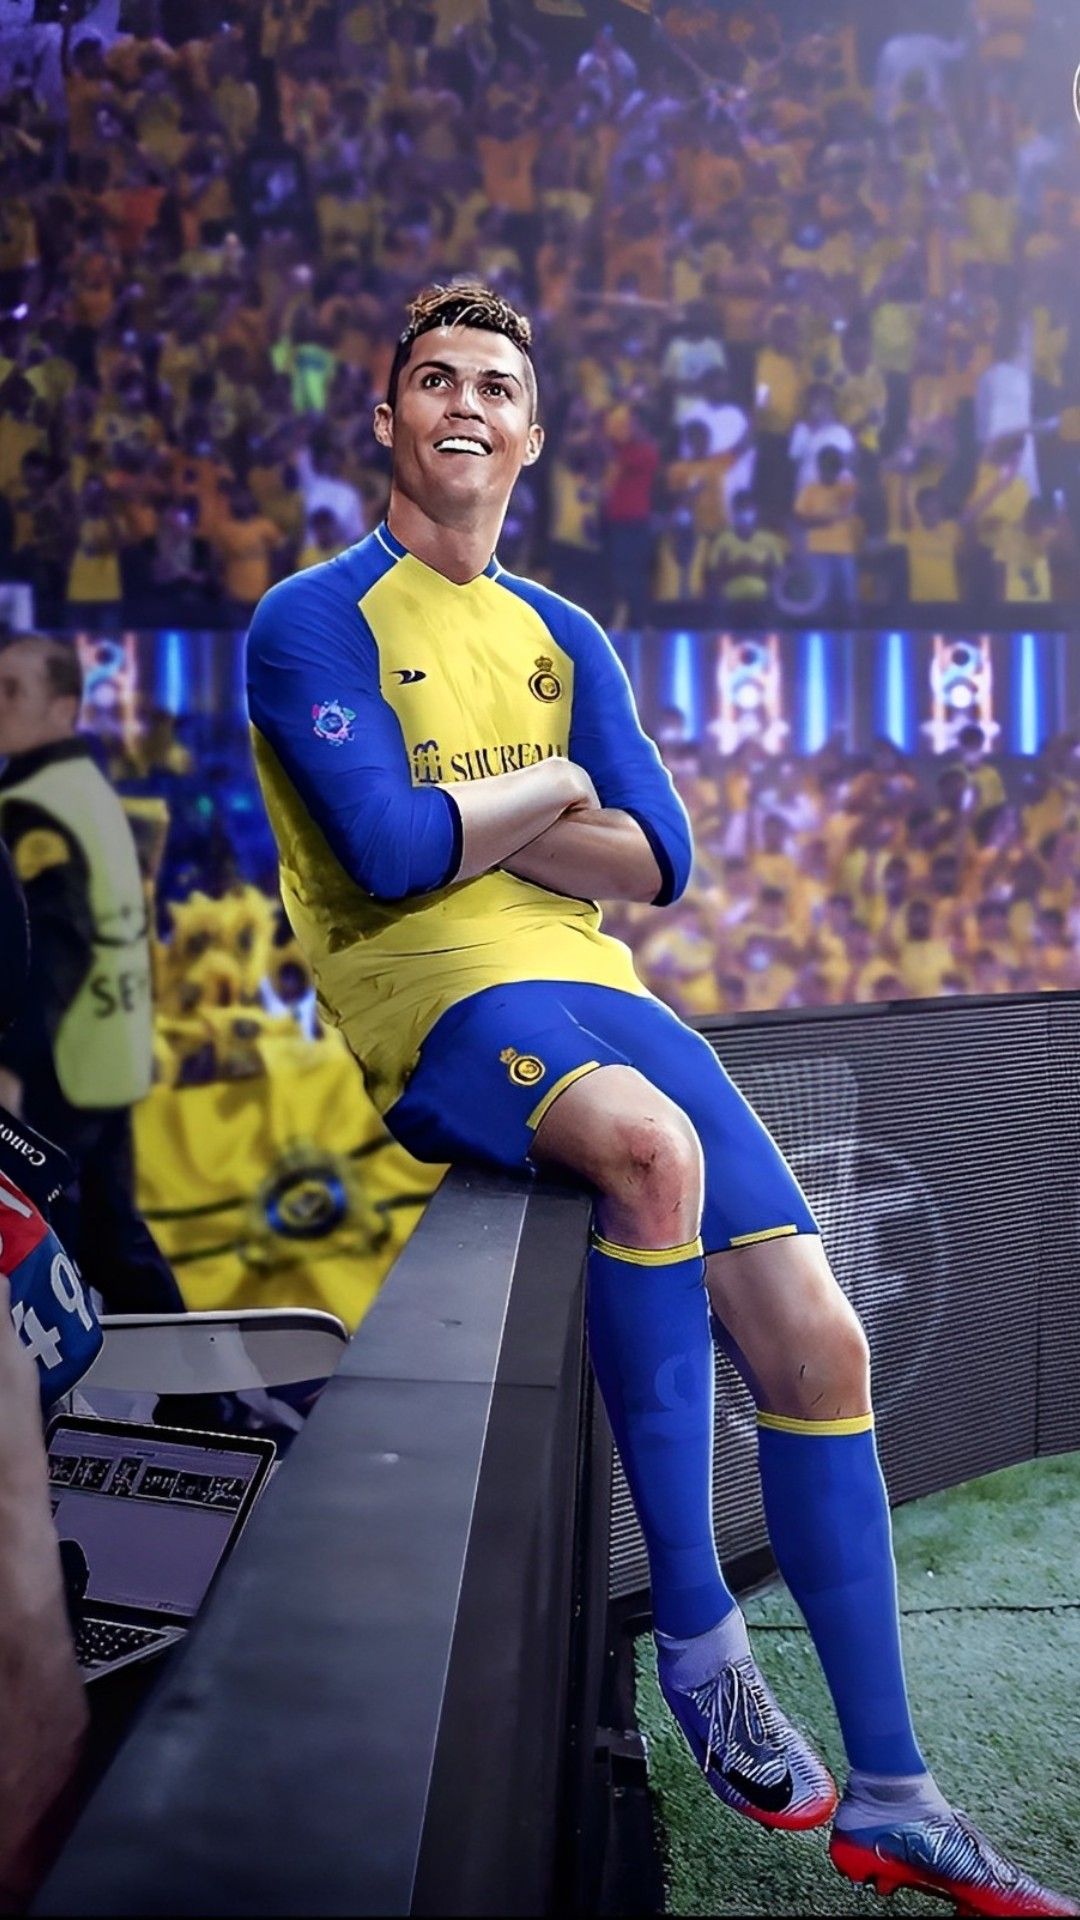 Cristiano Ronaldo sitting on the bench in a yellow and blue uniform - Cristiano Ronaldo